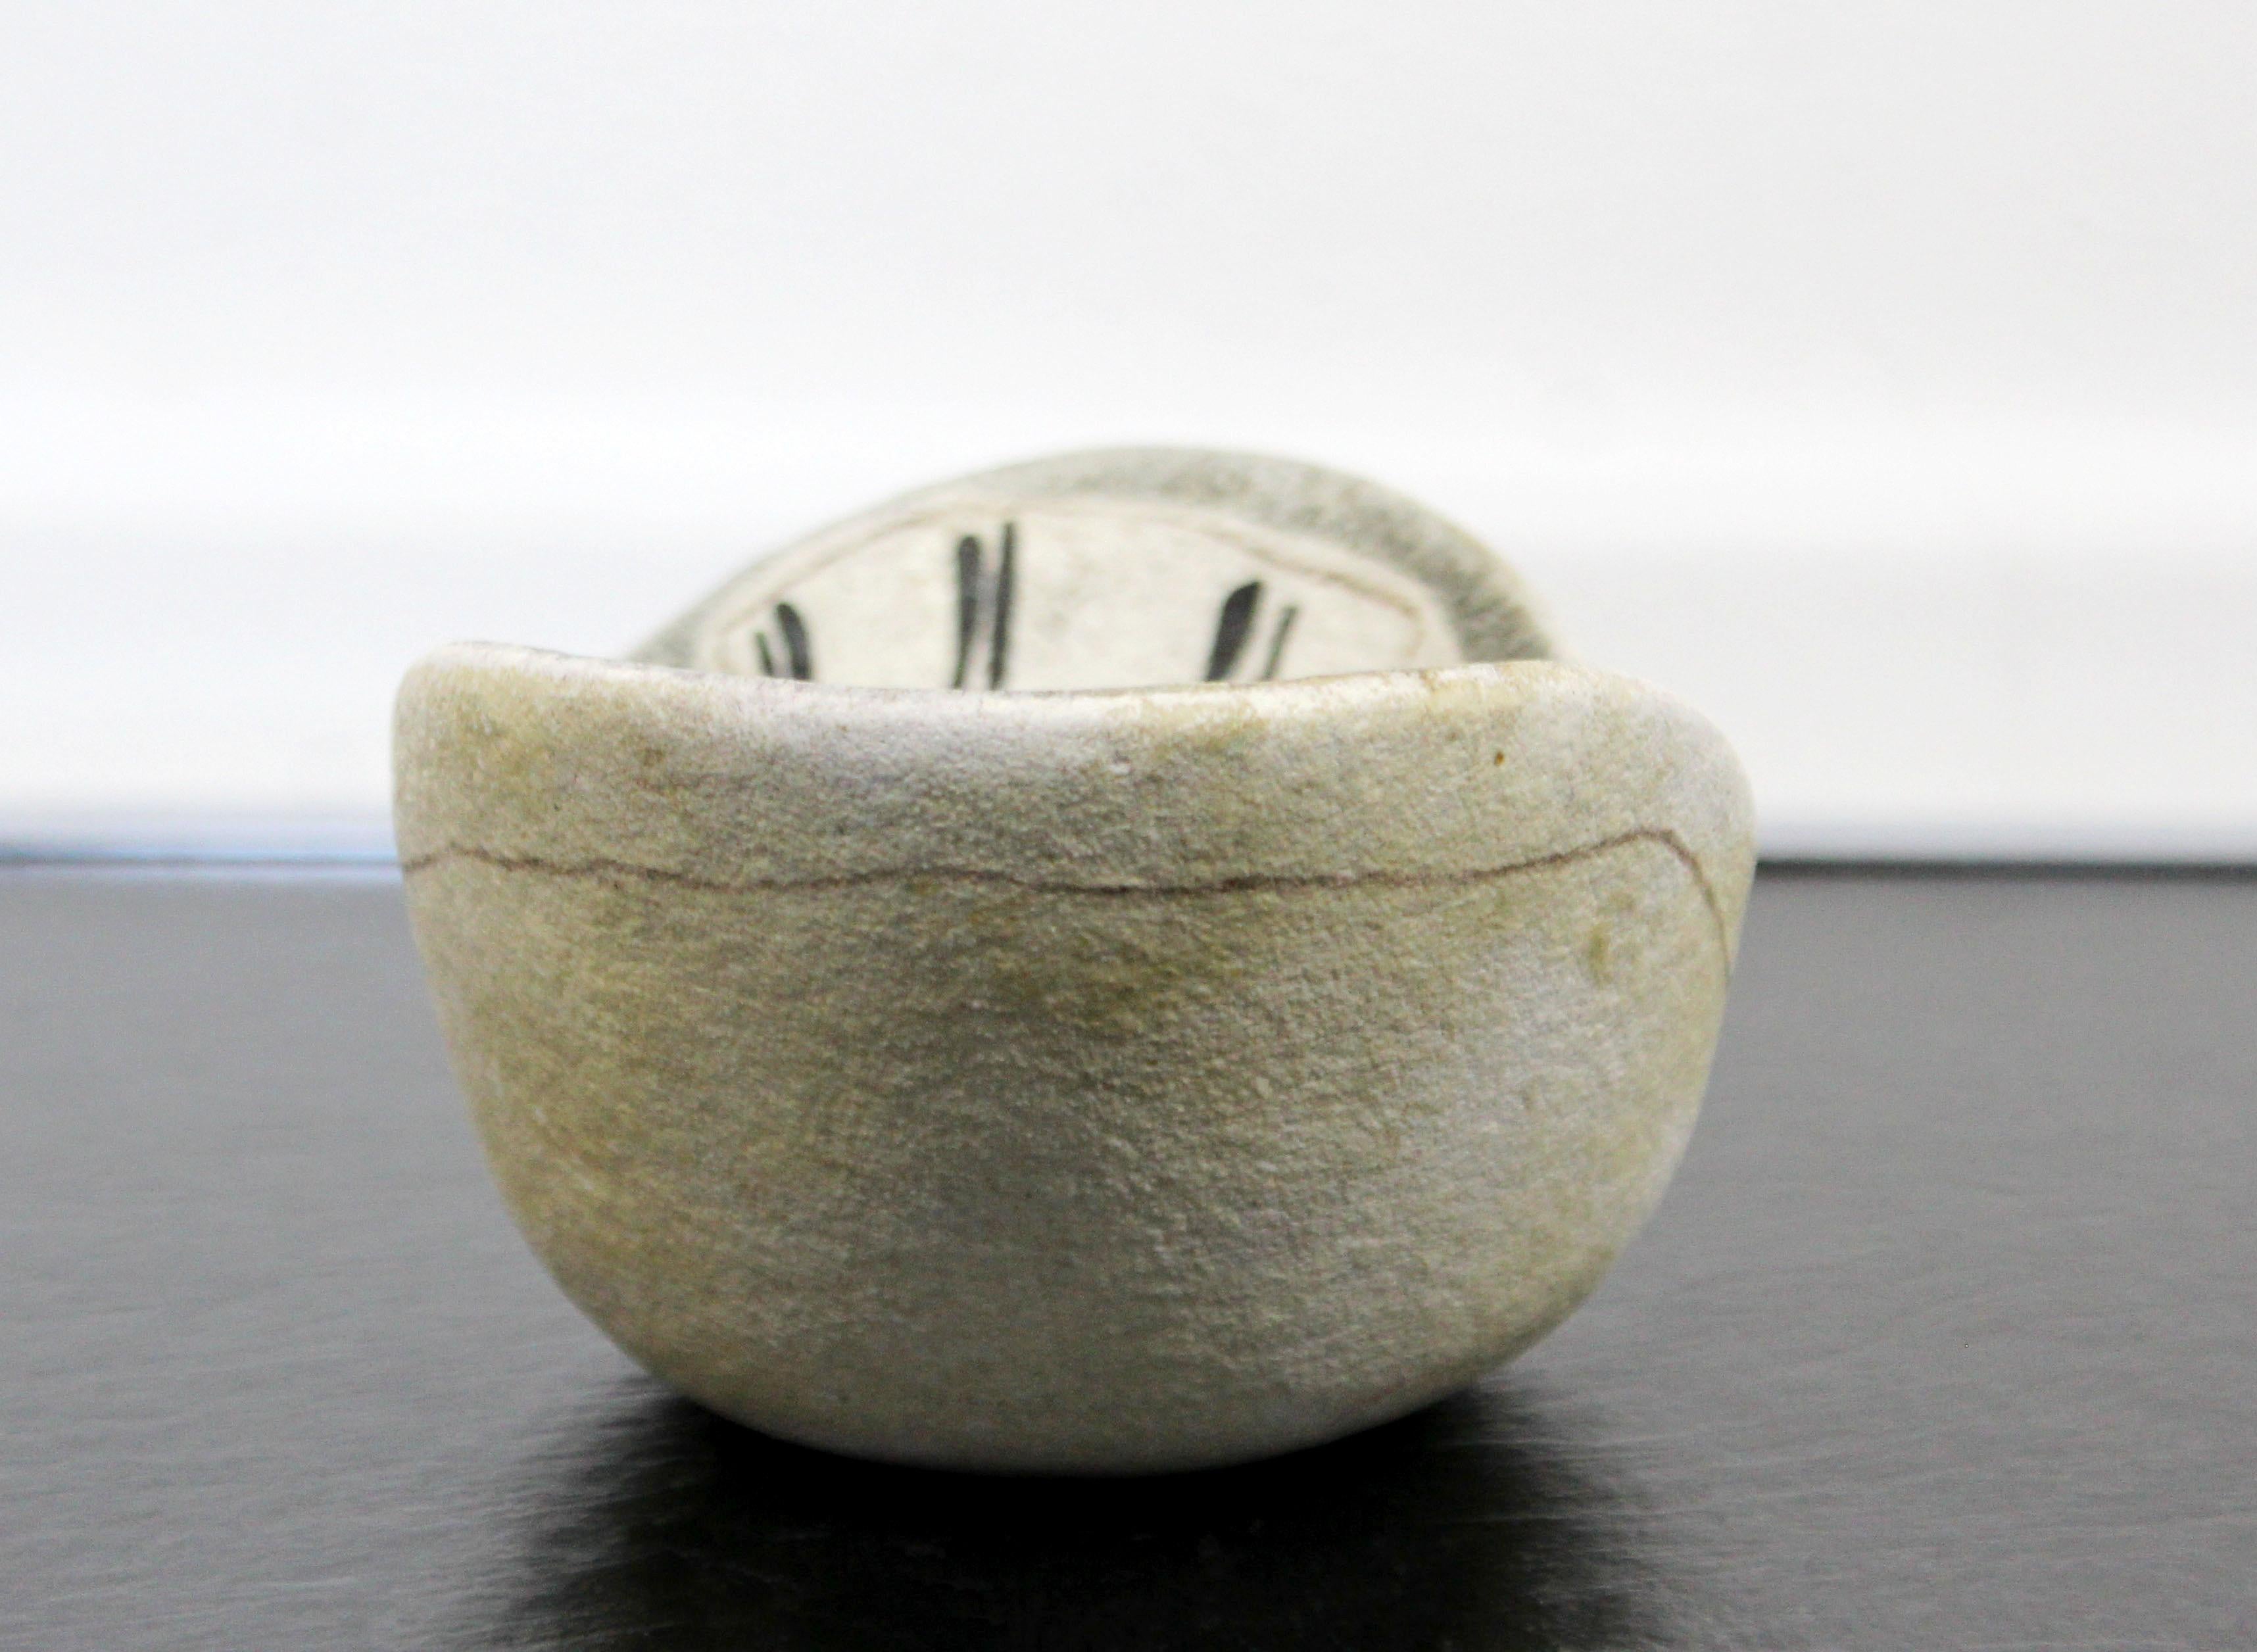 Mid-Century Modern Fantoni Raymor Signed Ceramic Art Bowl Made in Italy 1960s (Keramik)